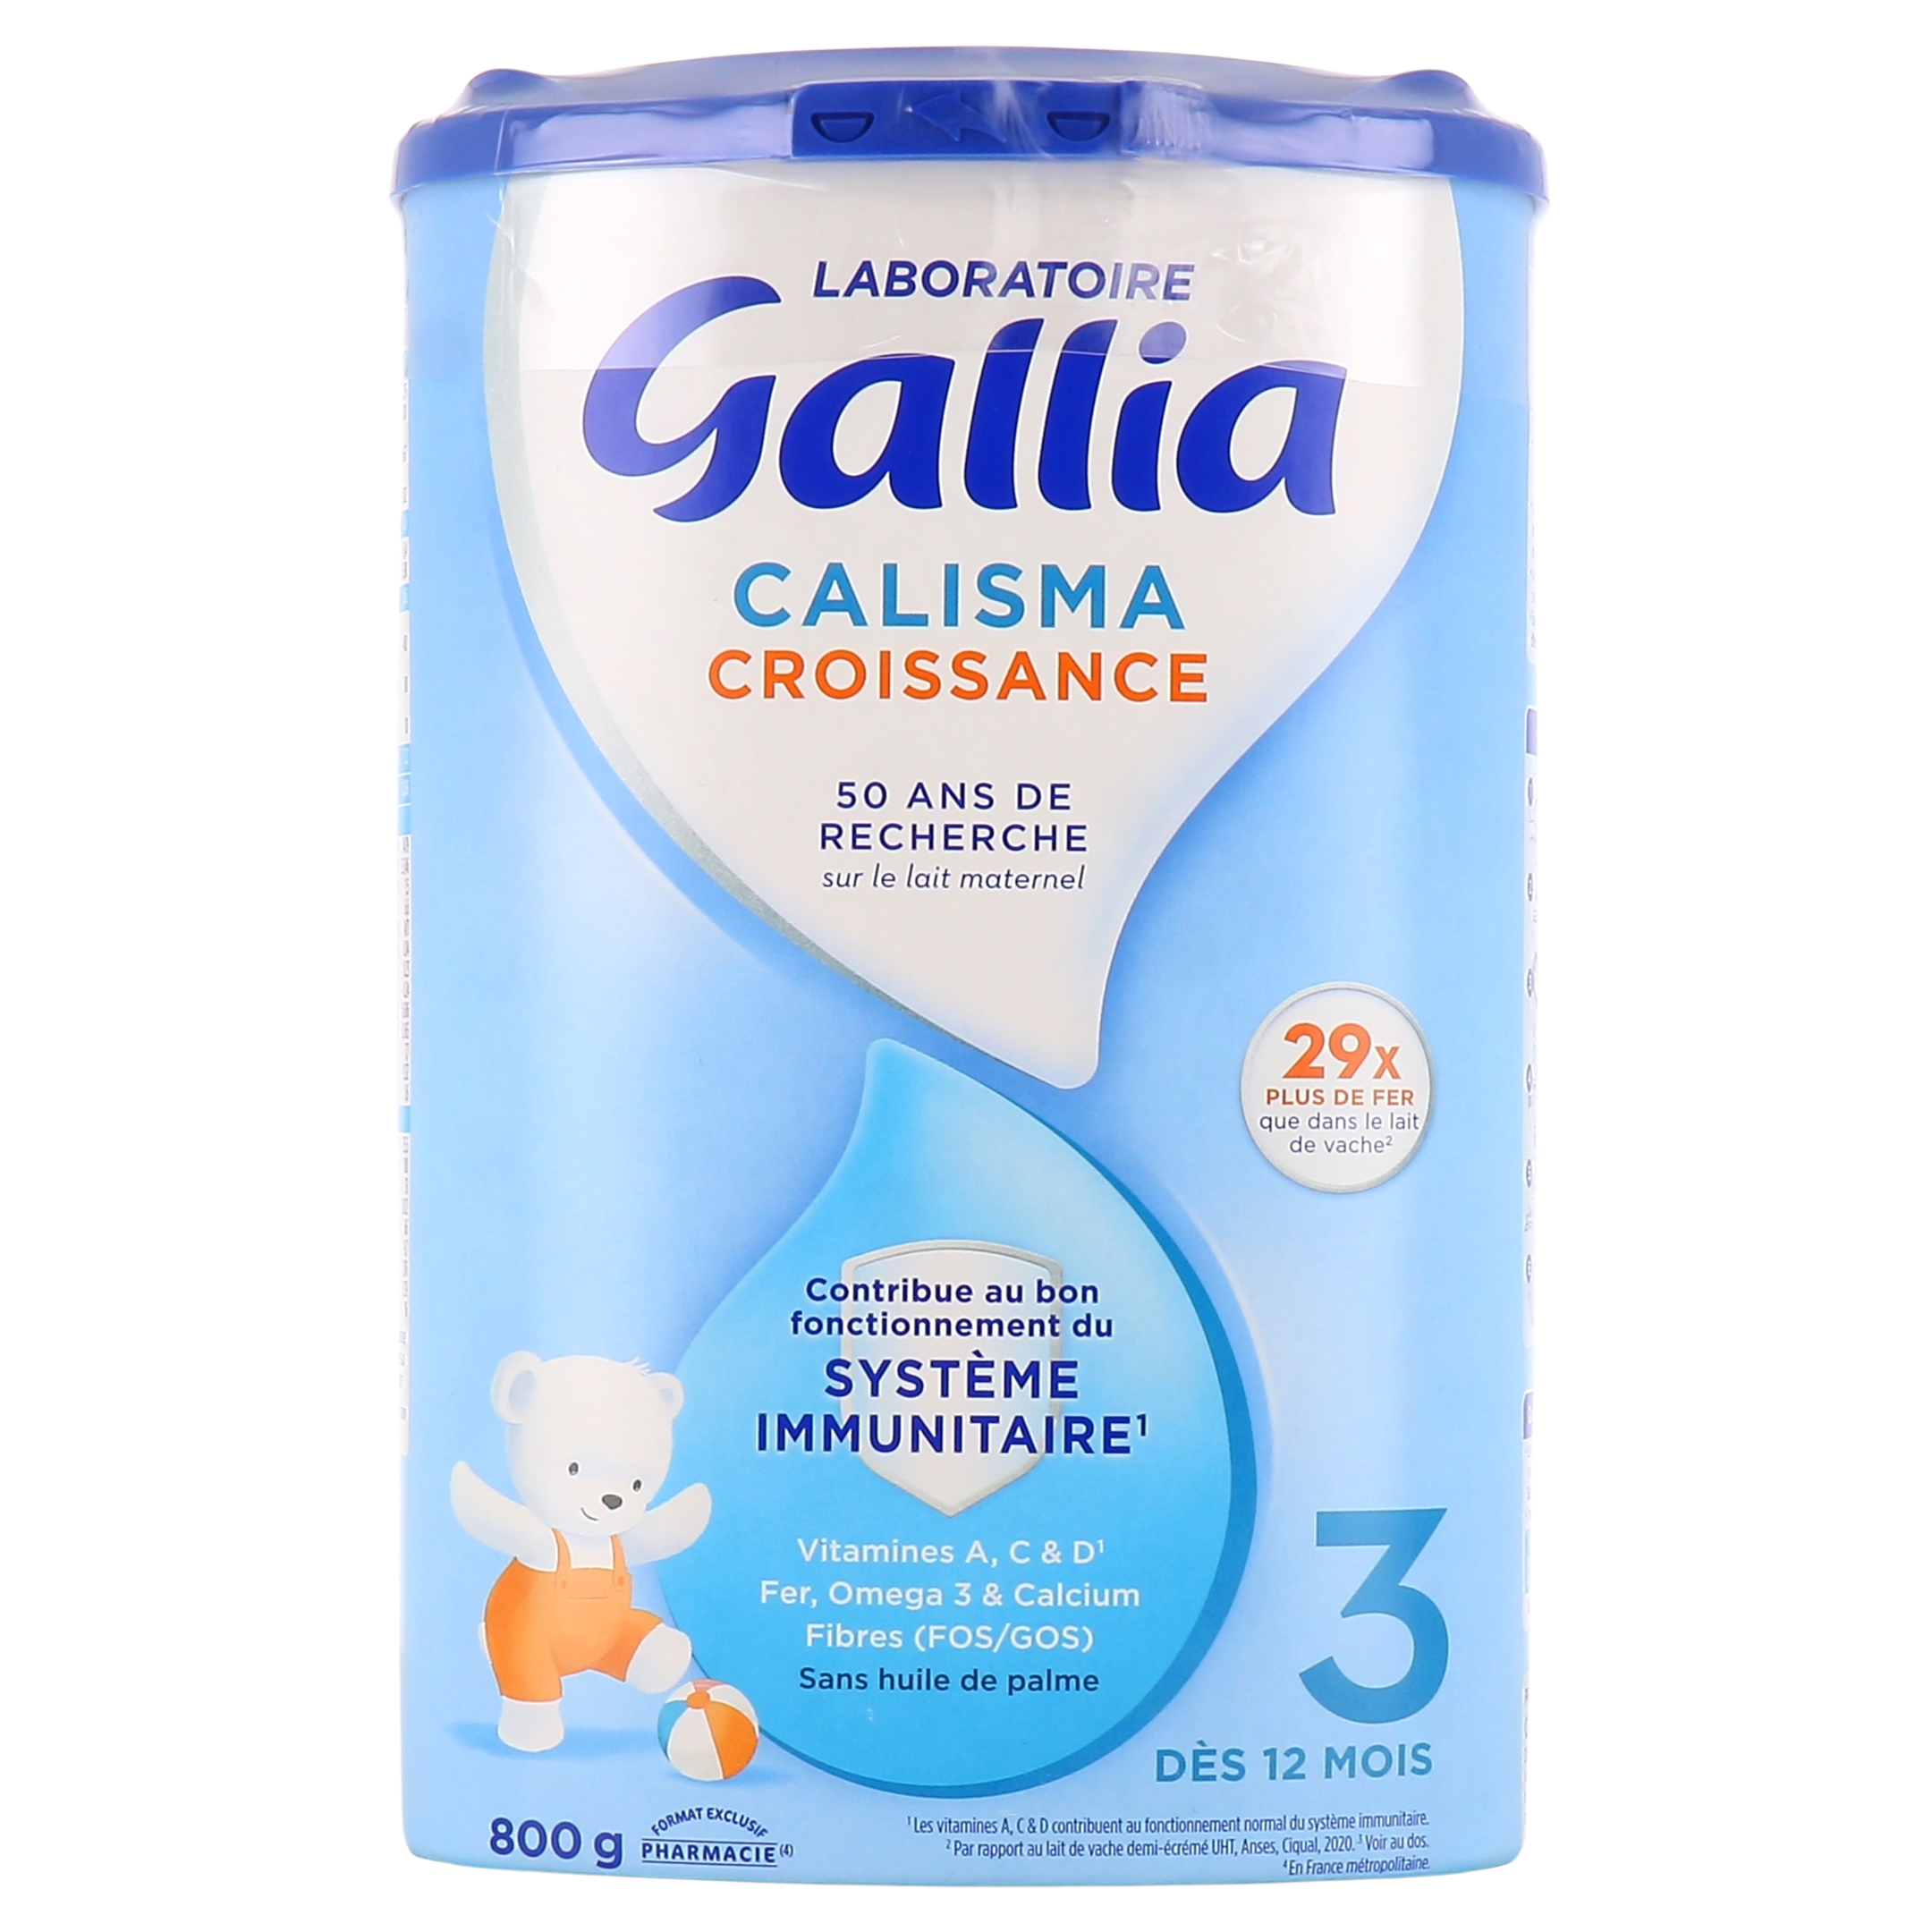 Lait Calisma - 2 ème Age - 6-12 Mois - Gallia - 800g - Gallia